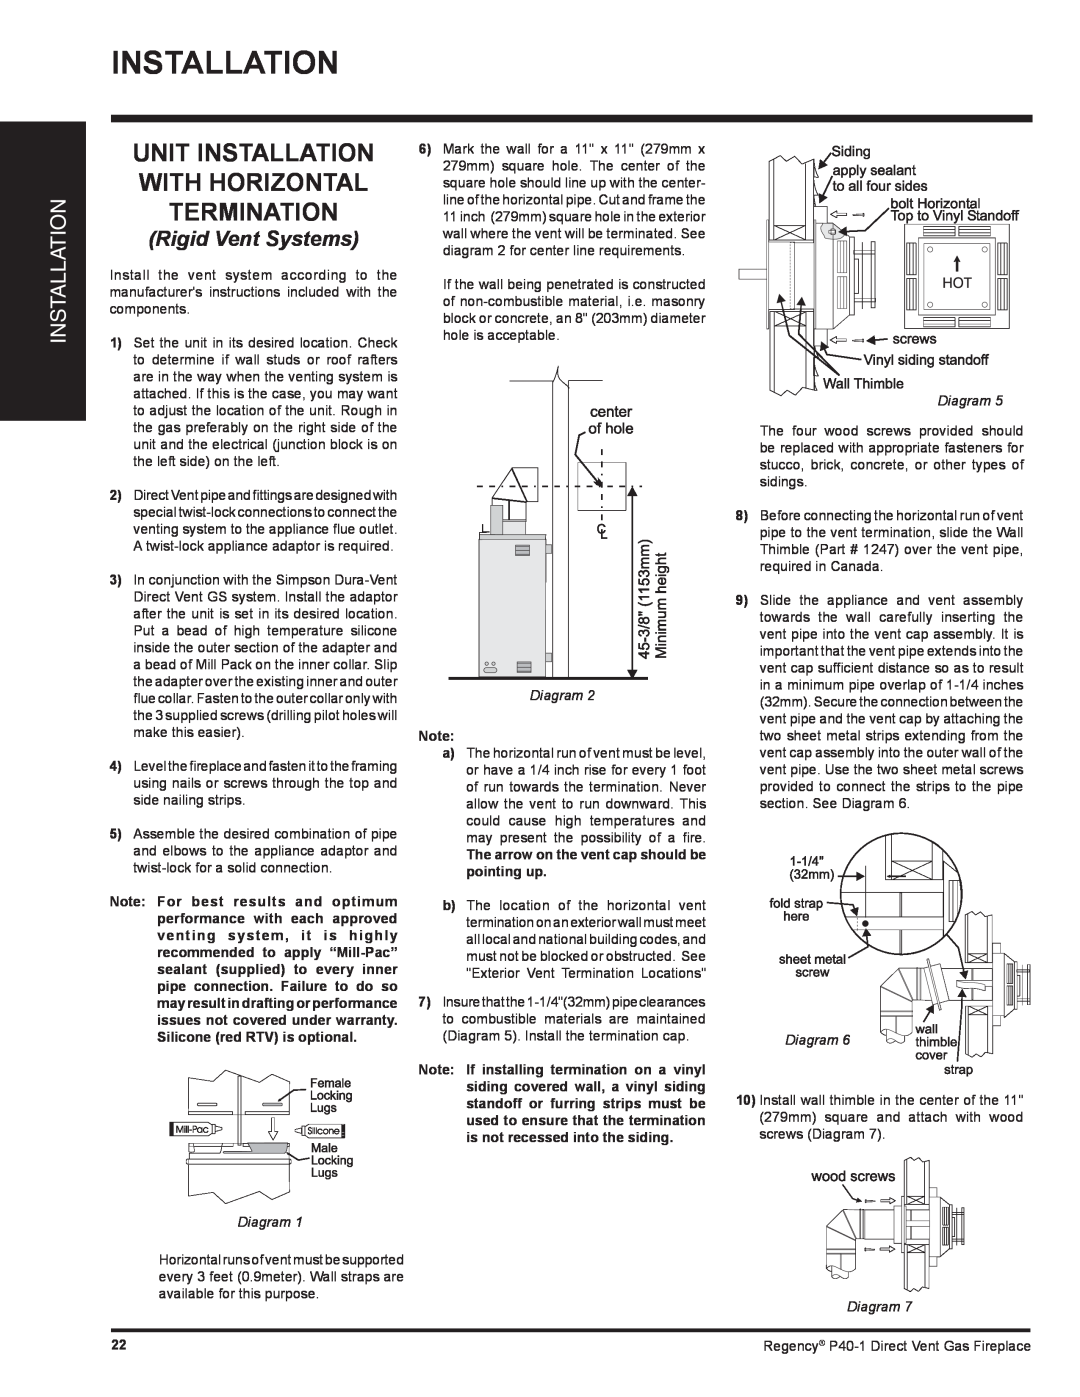 Regency P40-NG1, P40-LP1 installation manual Unit Installation With Horizontal Termination, Rigid Vent Systems, Diagram 